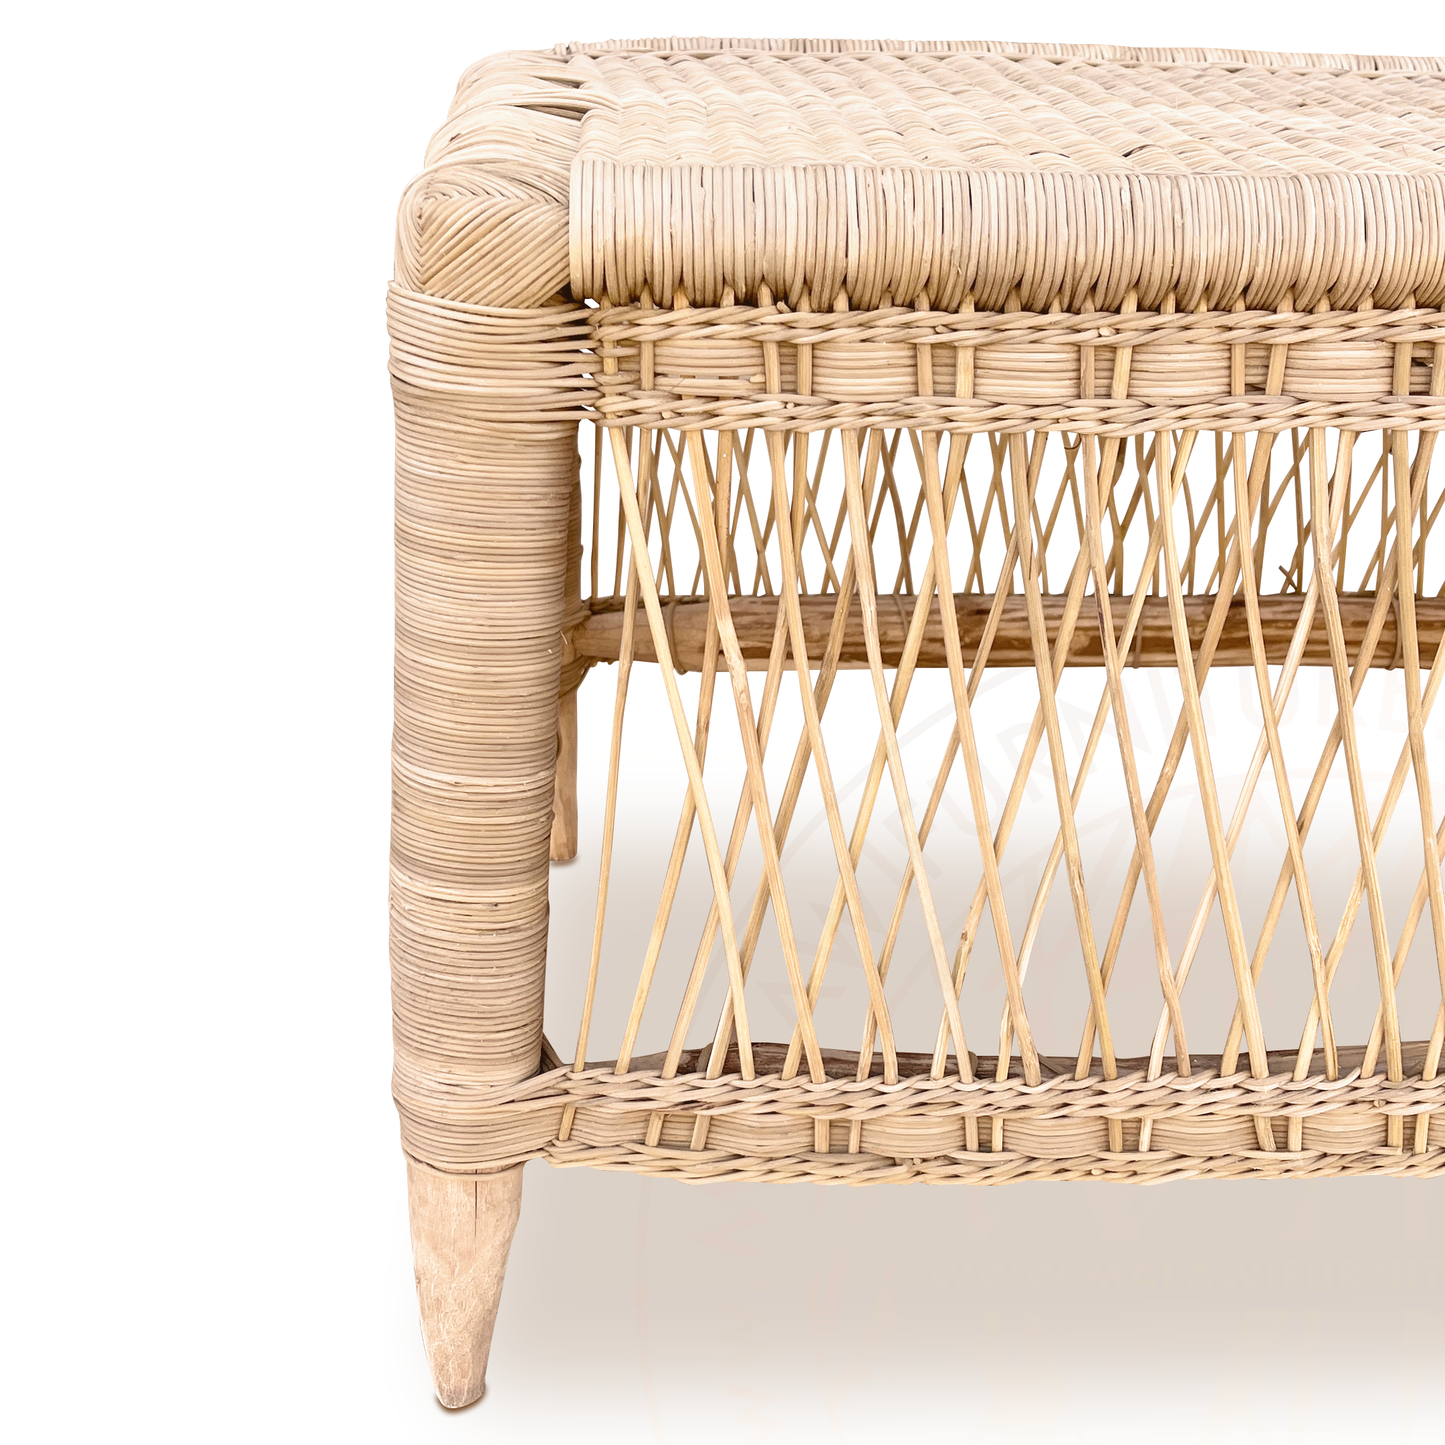 Classic Fancy Rectangular Bench Malawi Furniture hand weaved natural hand made rattan stool